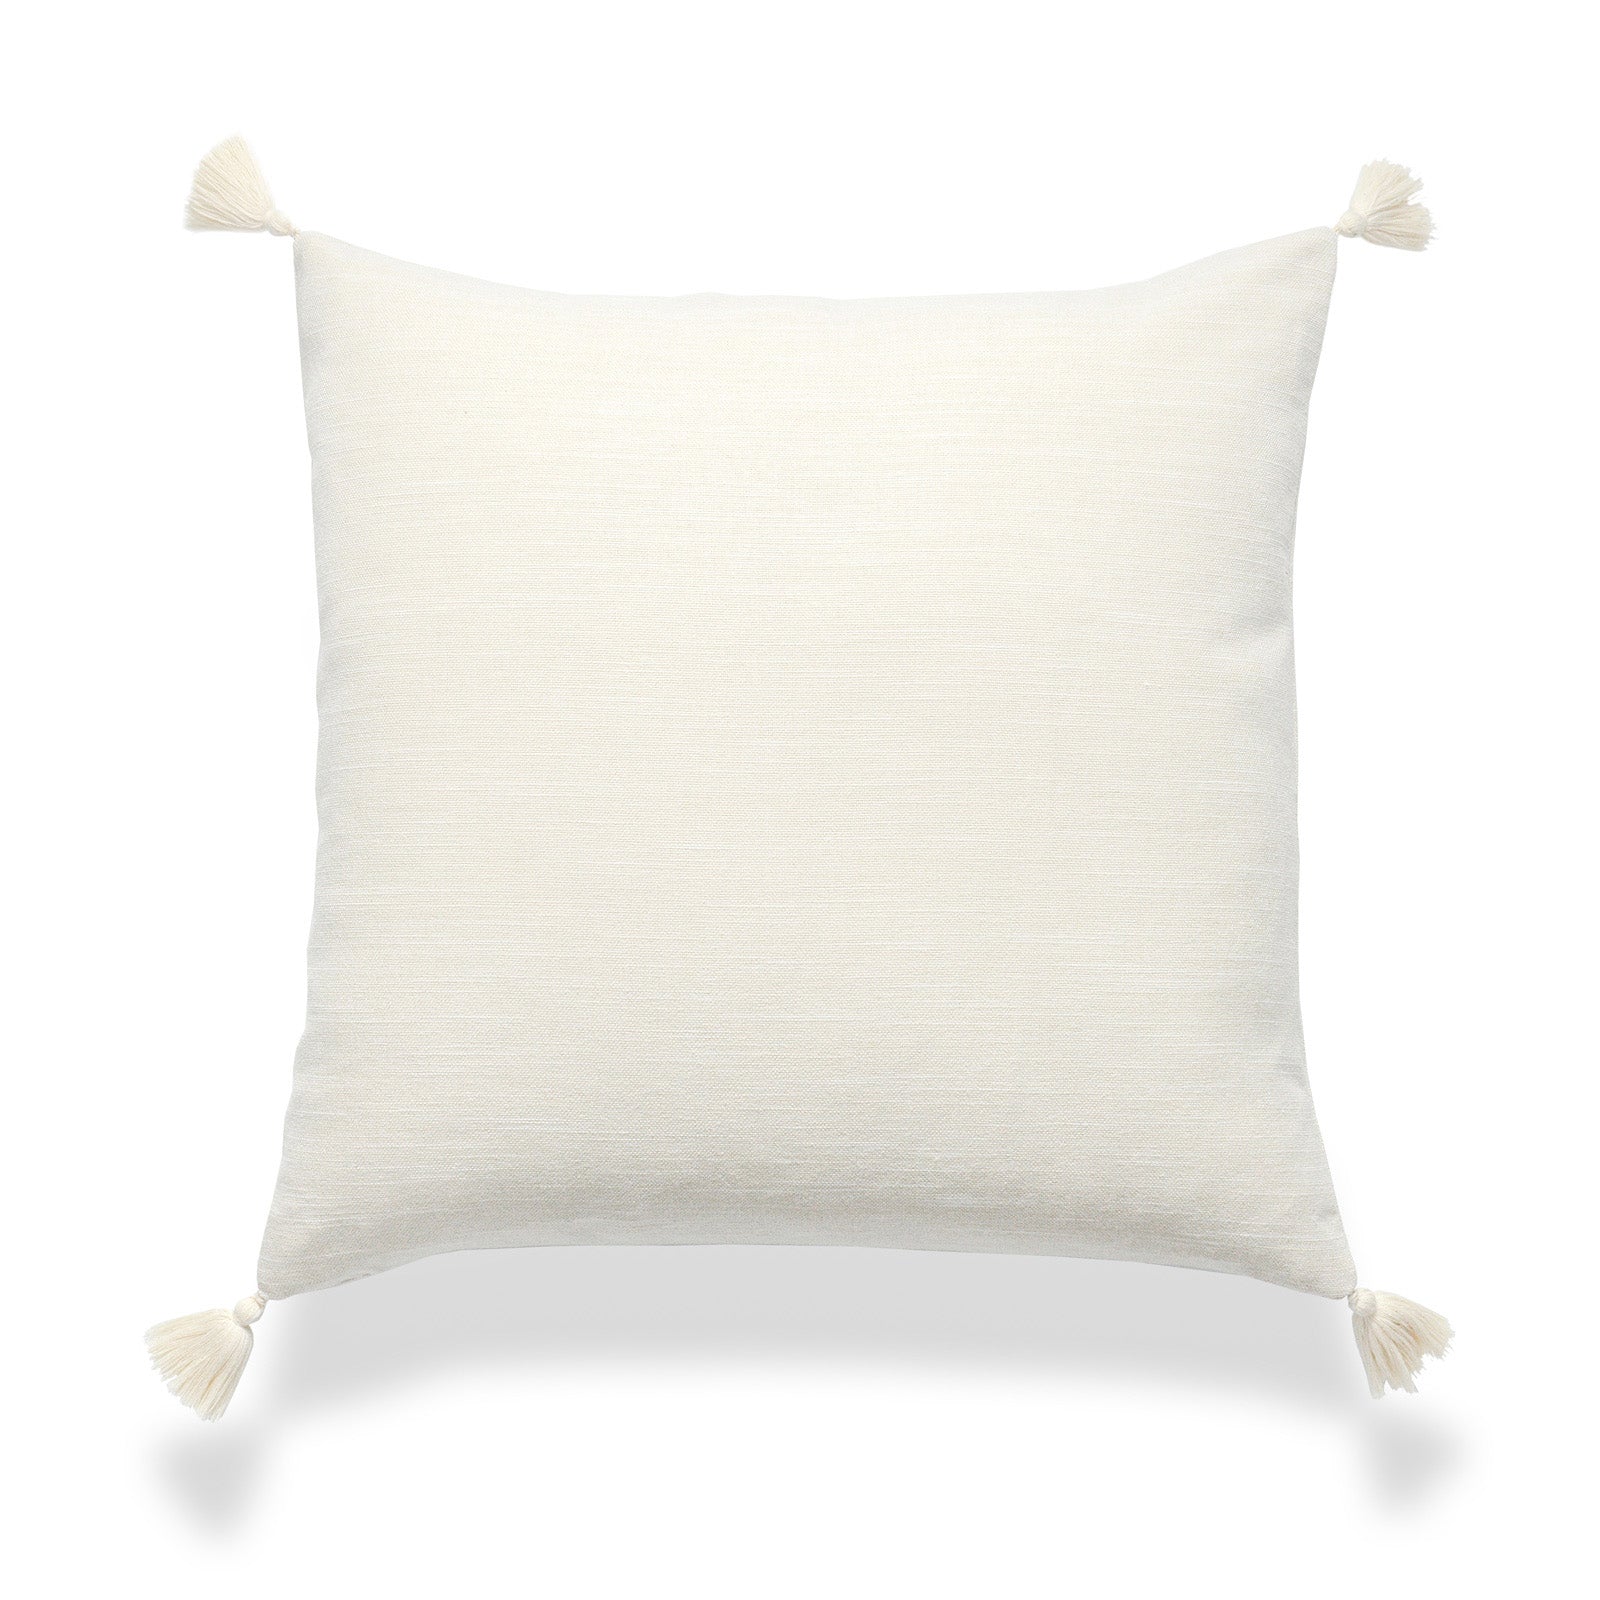 Neutral Throw Pillow Cover, Beige Plain With Tassels, 20"x20"